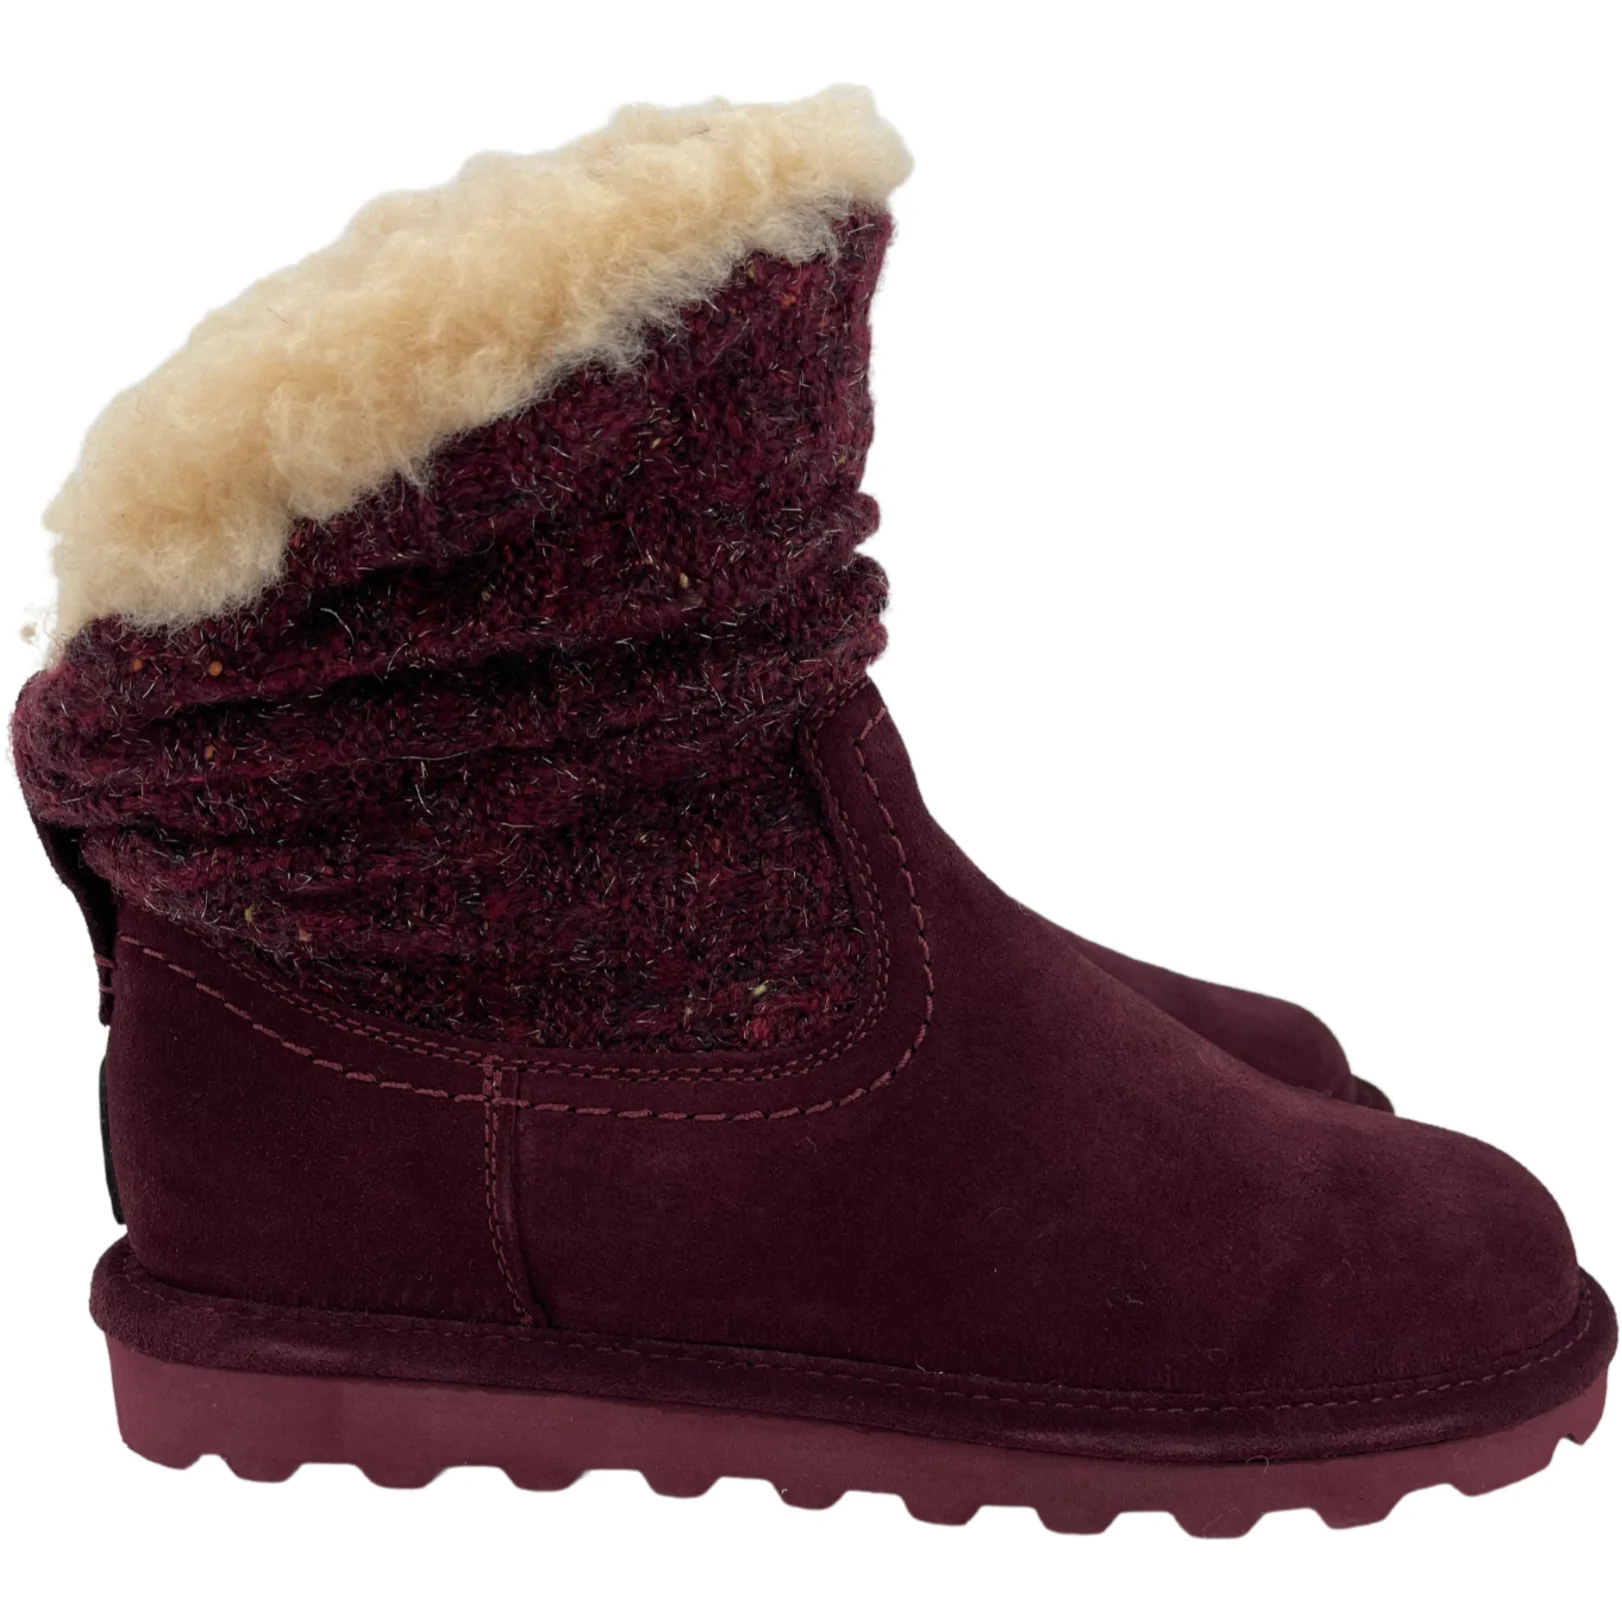 BearPaw Women's Winter Boots / Virginia / Wine / Short Boot / Size 8 **No Tags**